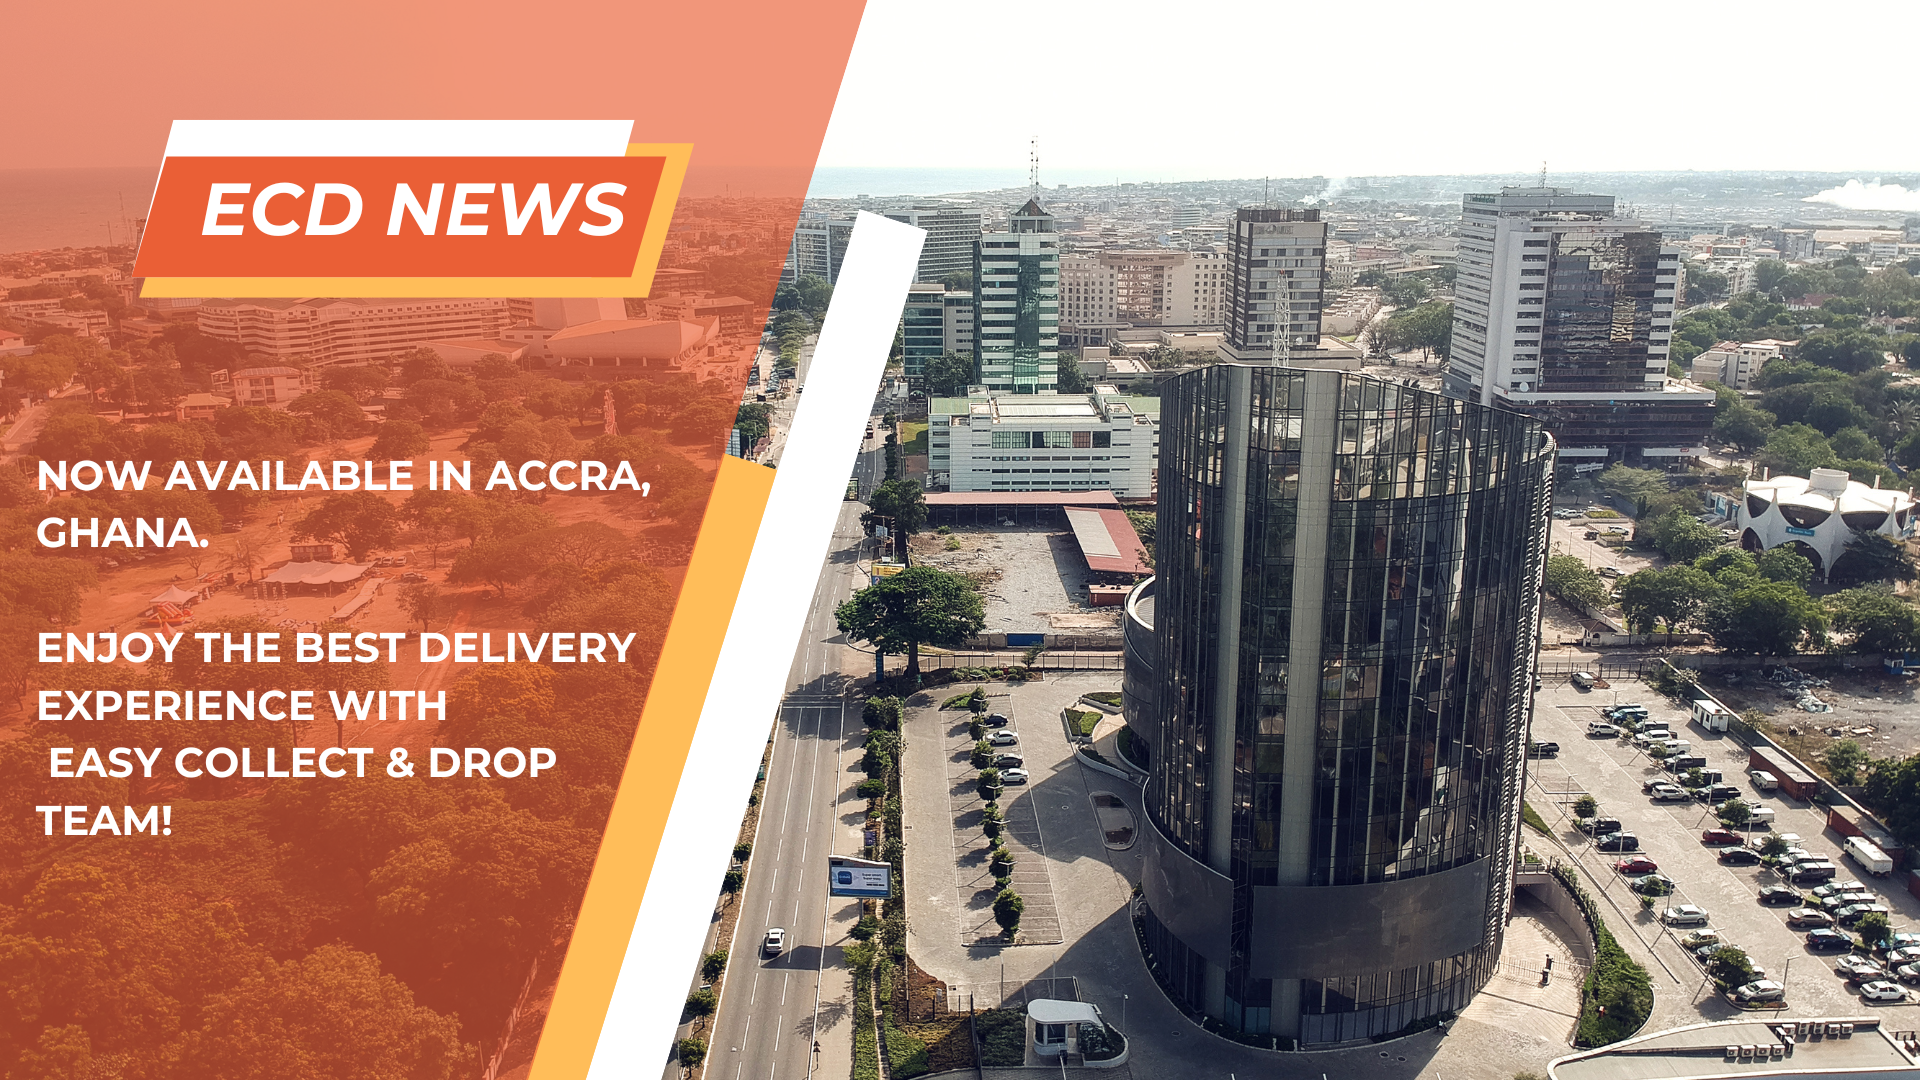 ECD Accra news